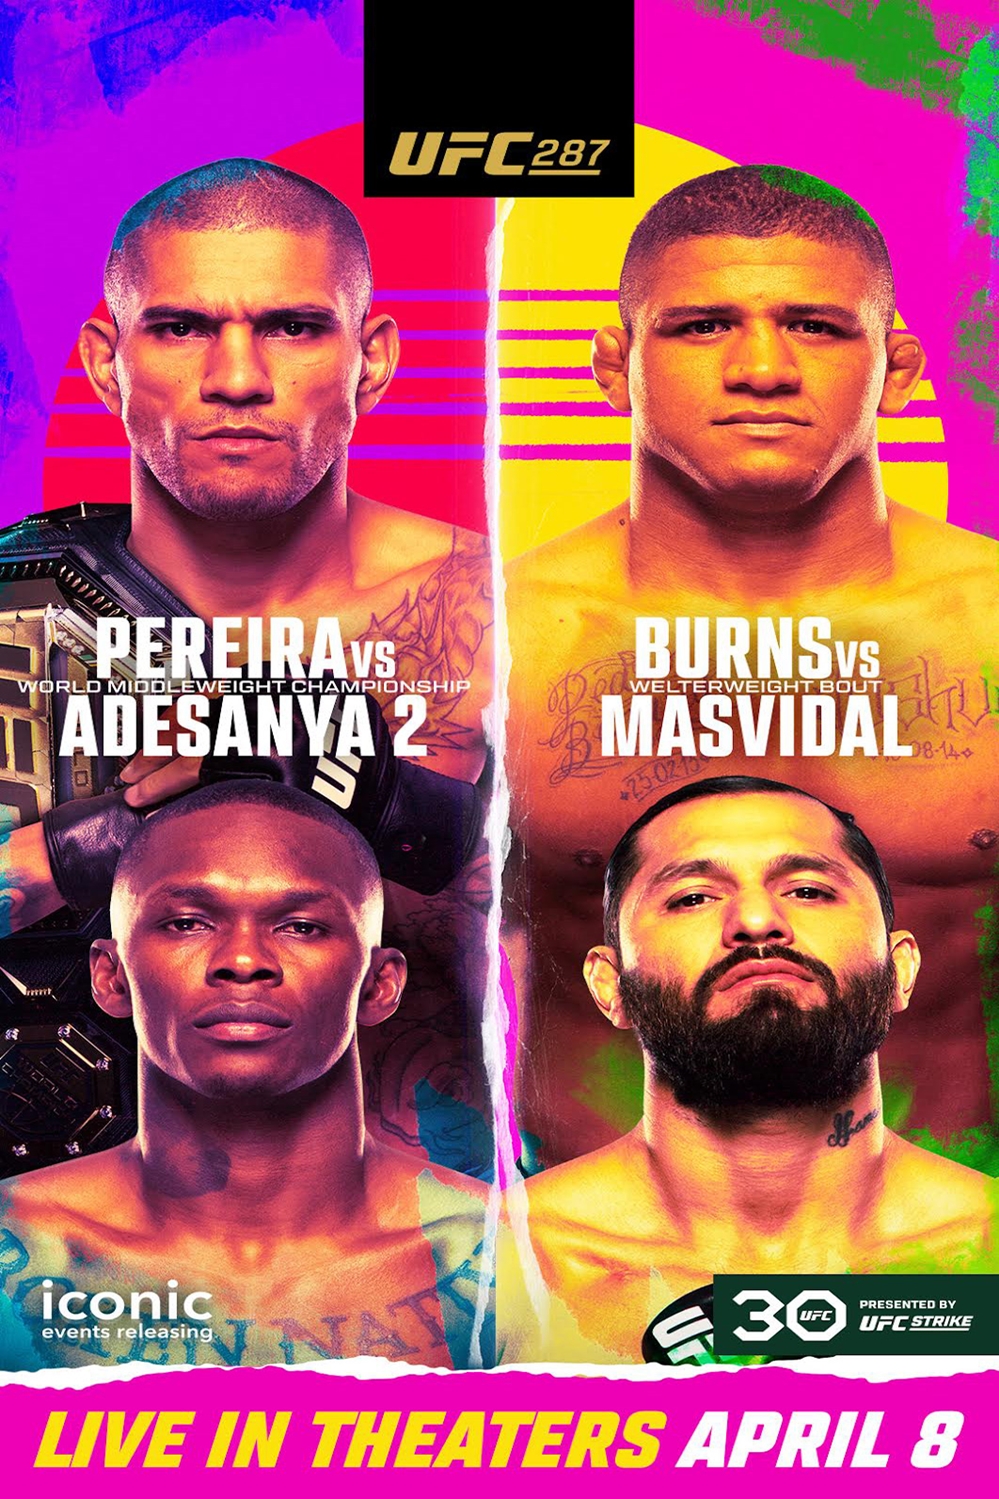 UFC 287 Pereira vs Adesanya 2 Poster